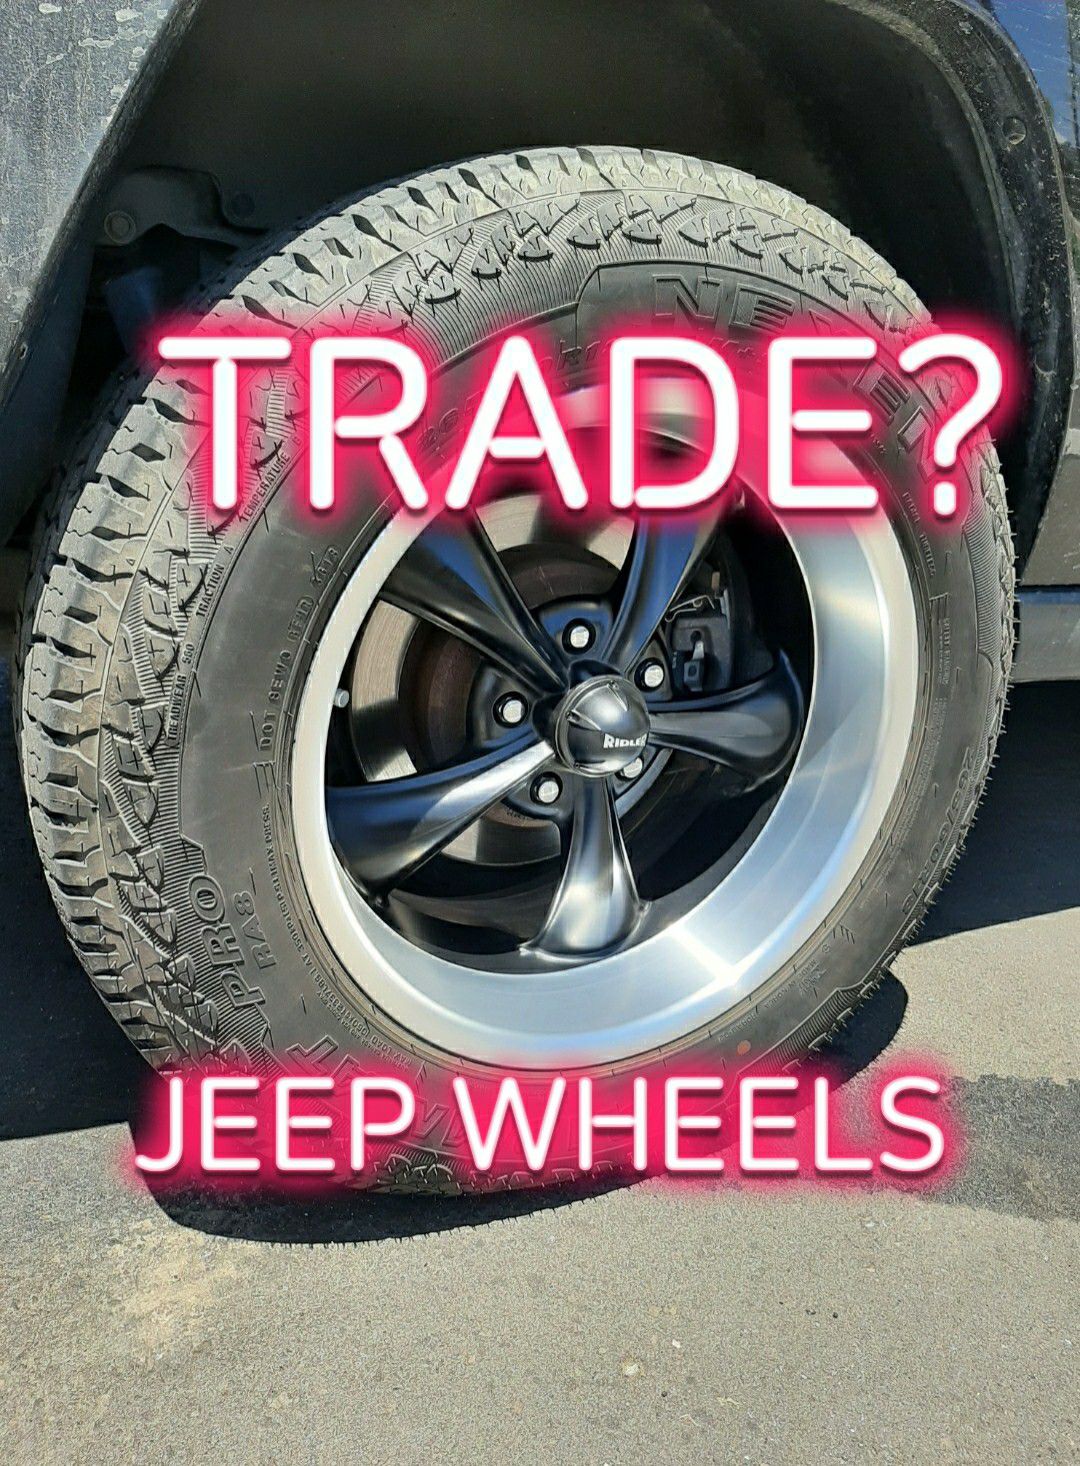 Trade jeep wheels?